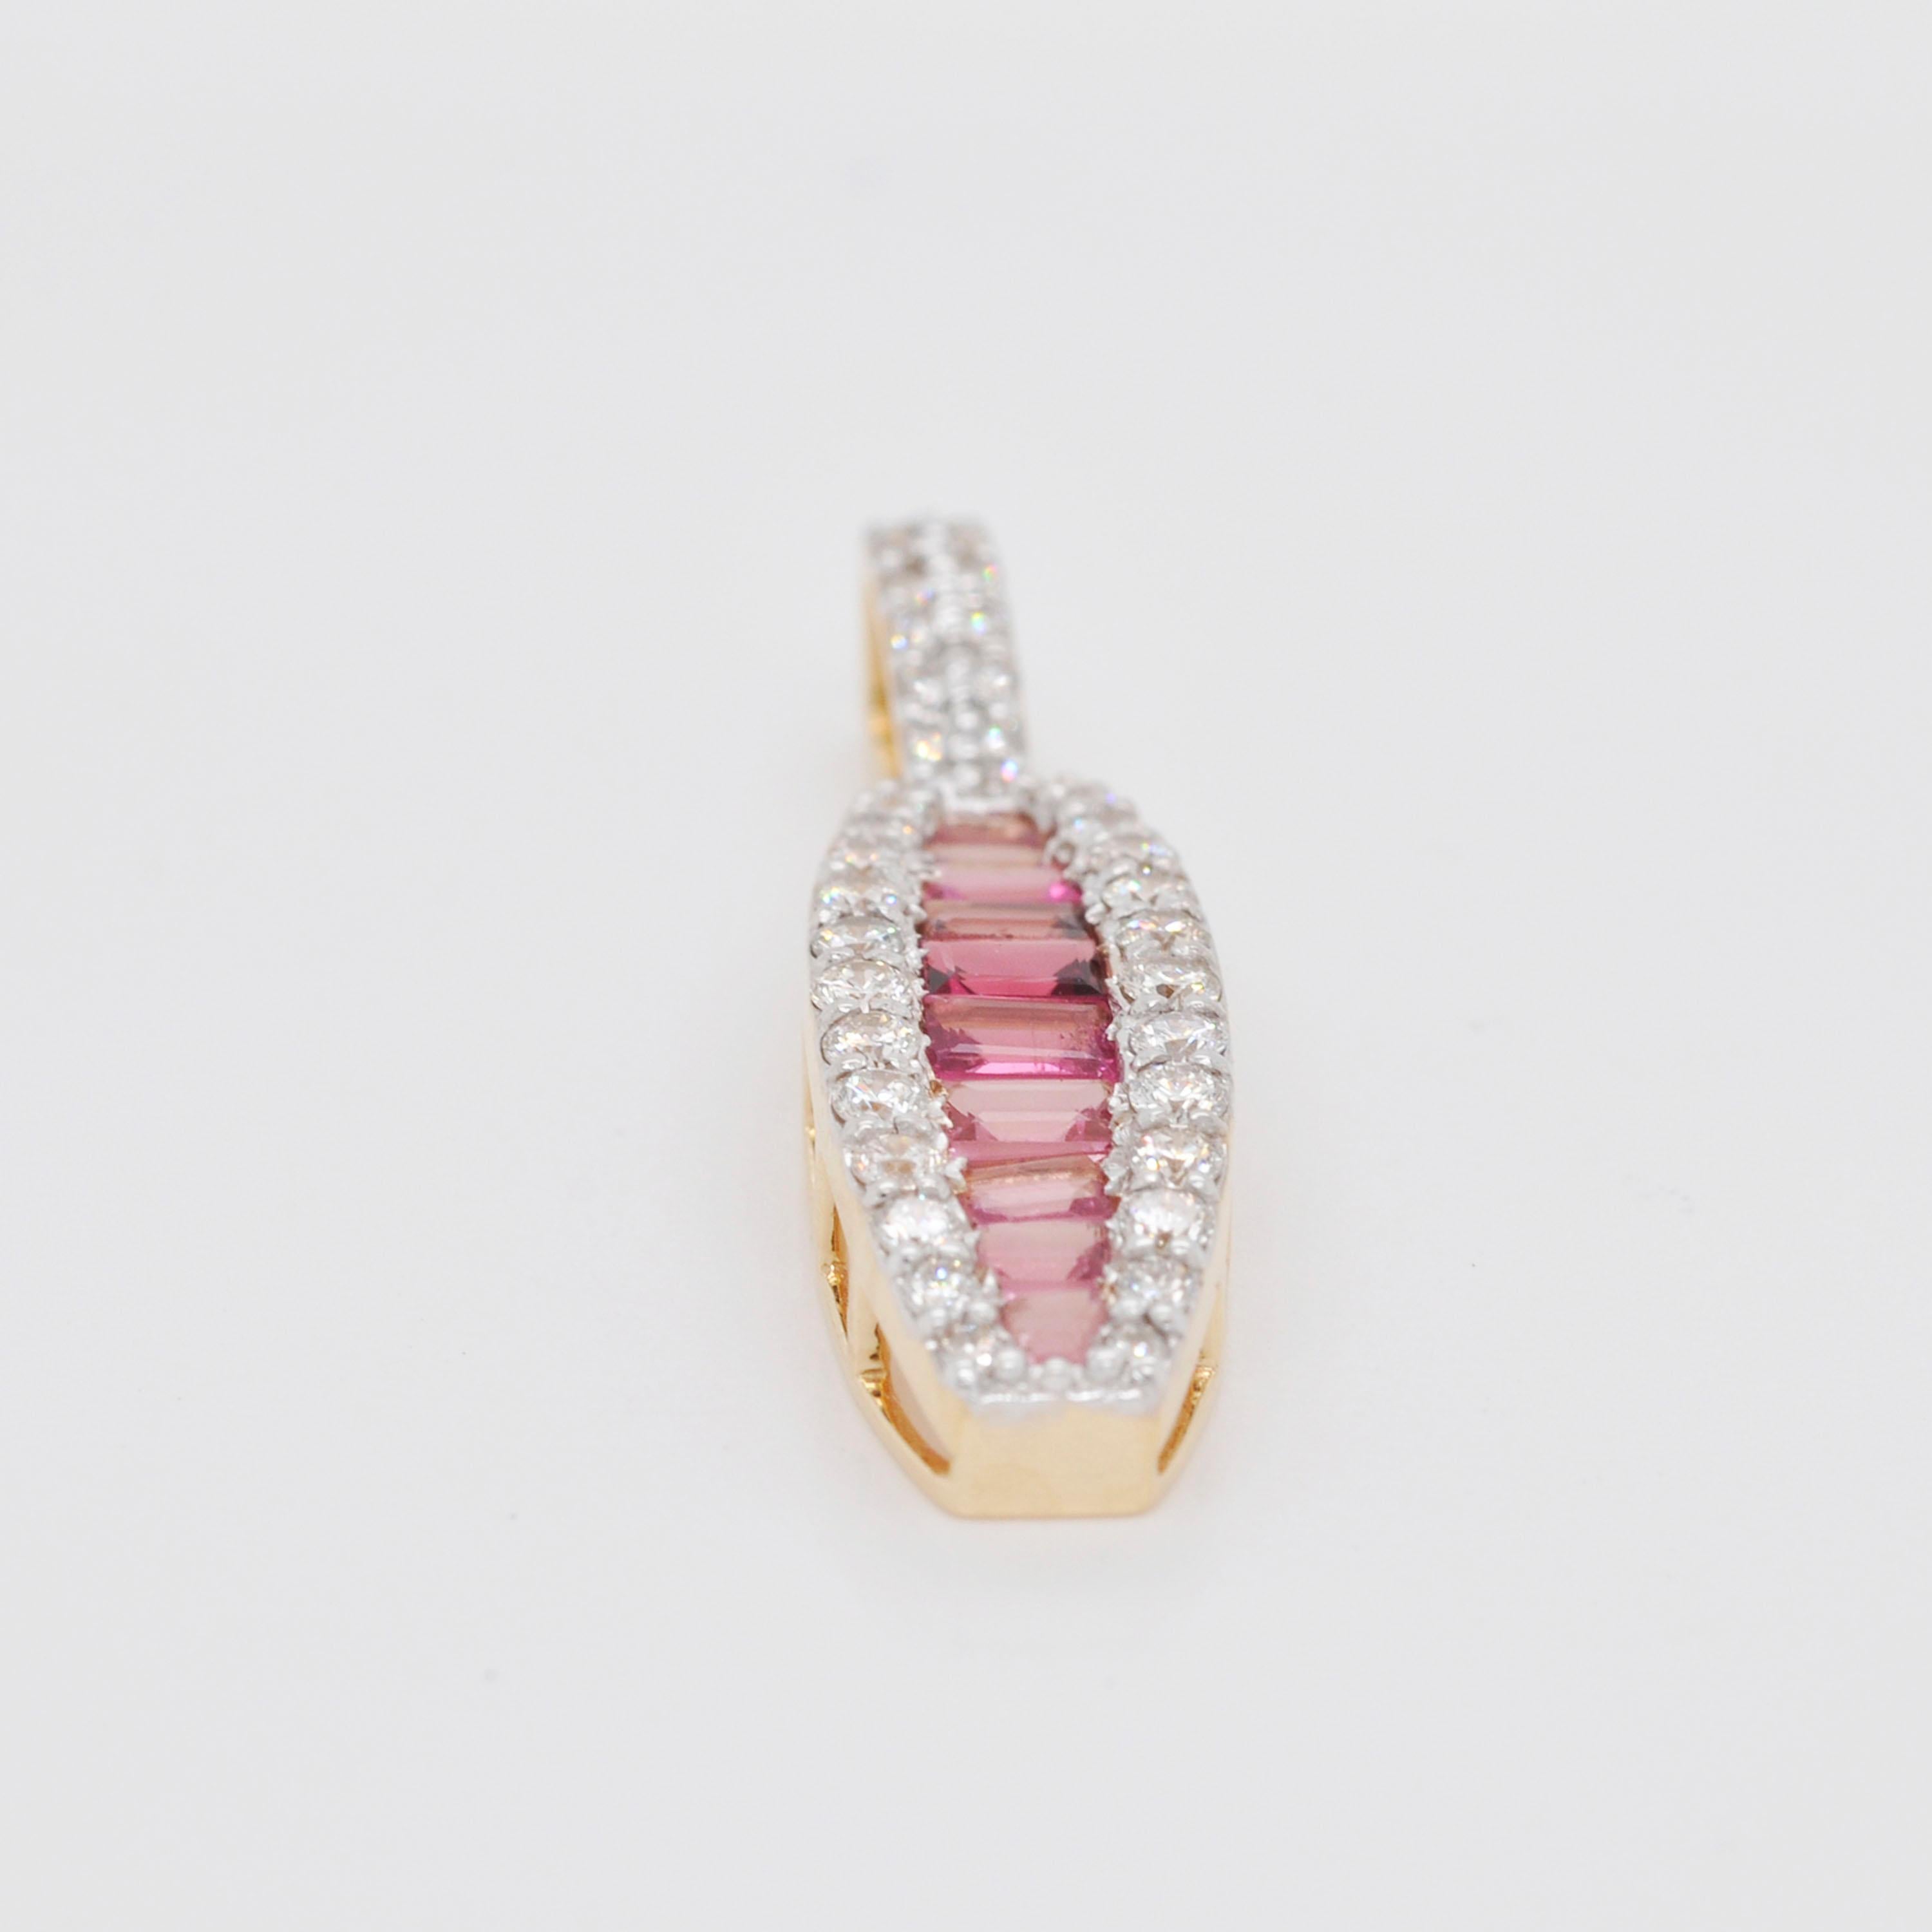 18 Karat Gold Channel Set Rosa Turmalin Baguette Diamant Anhänger Halskette im Angebot 2